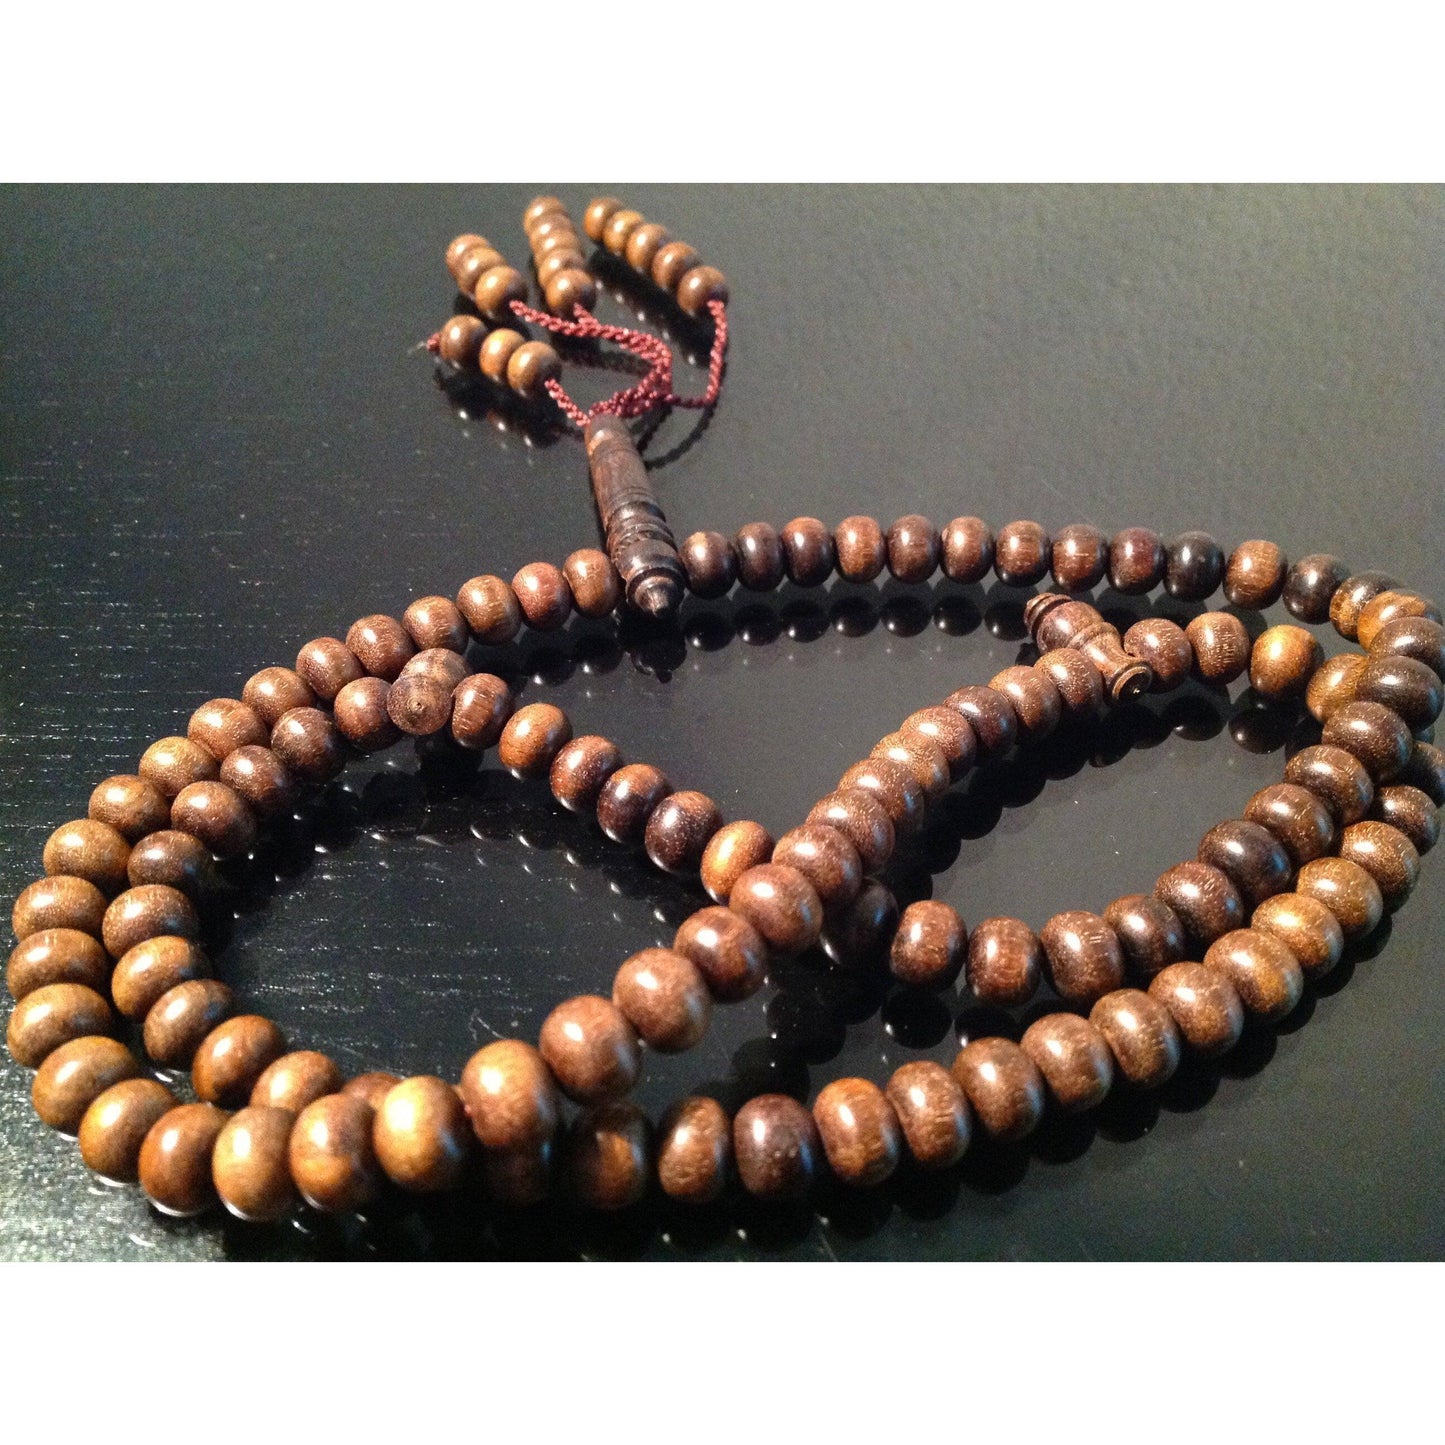 Healing wood prayer beads - Kehtam Mesbah - sufi magic